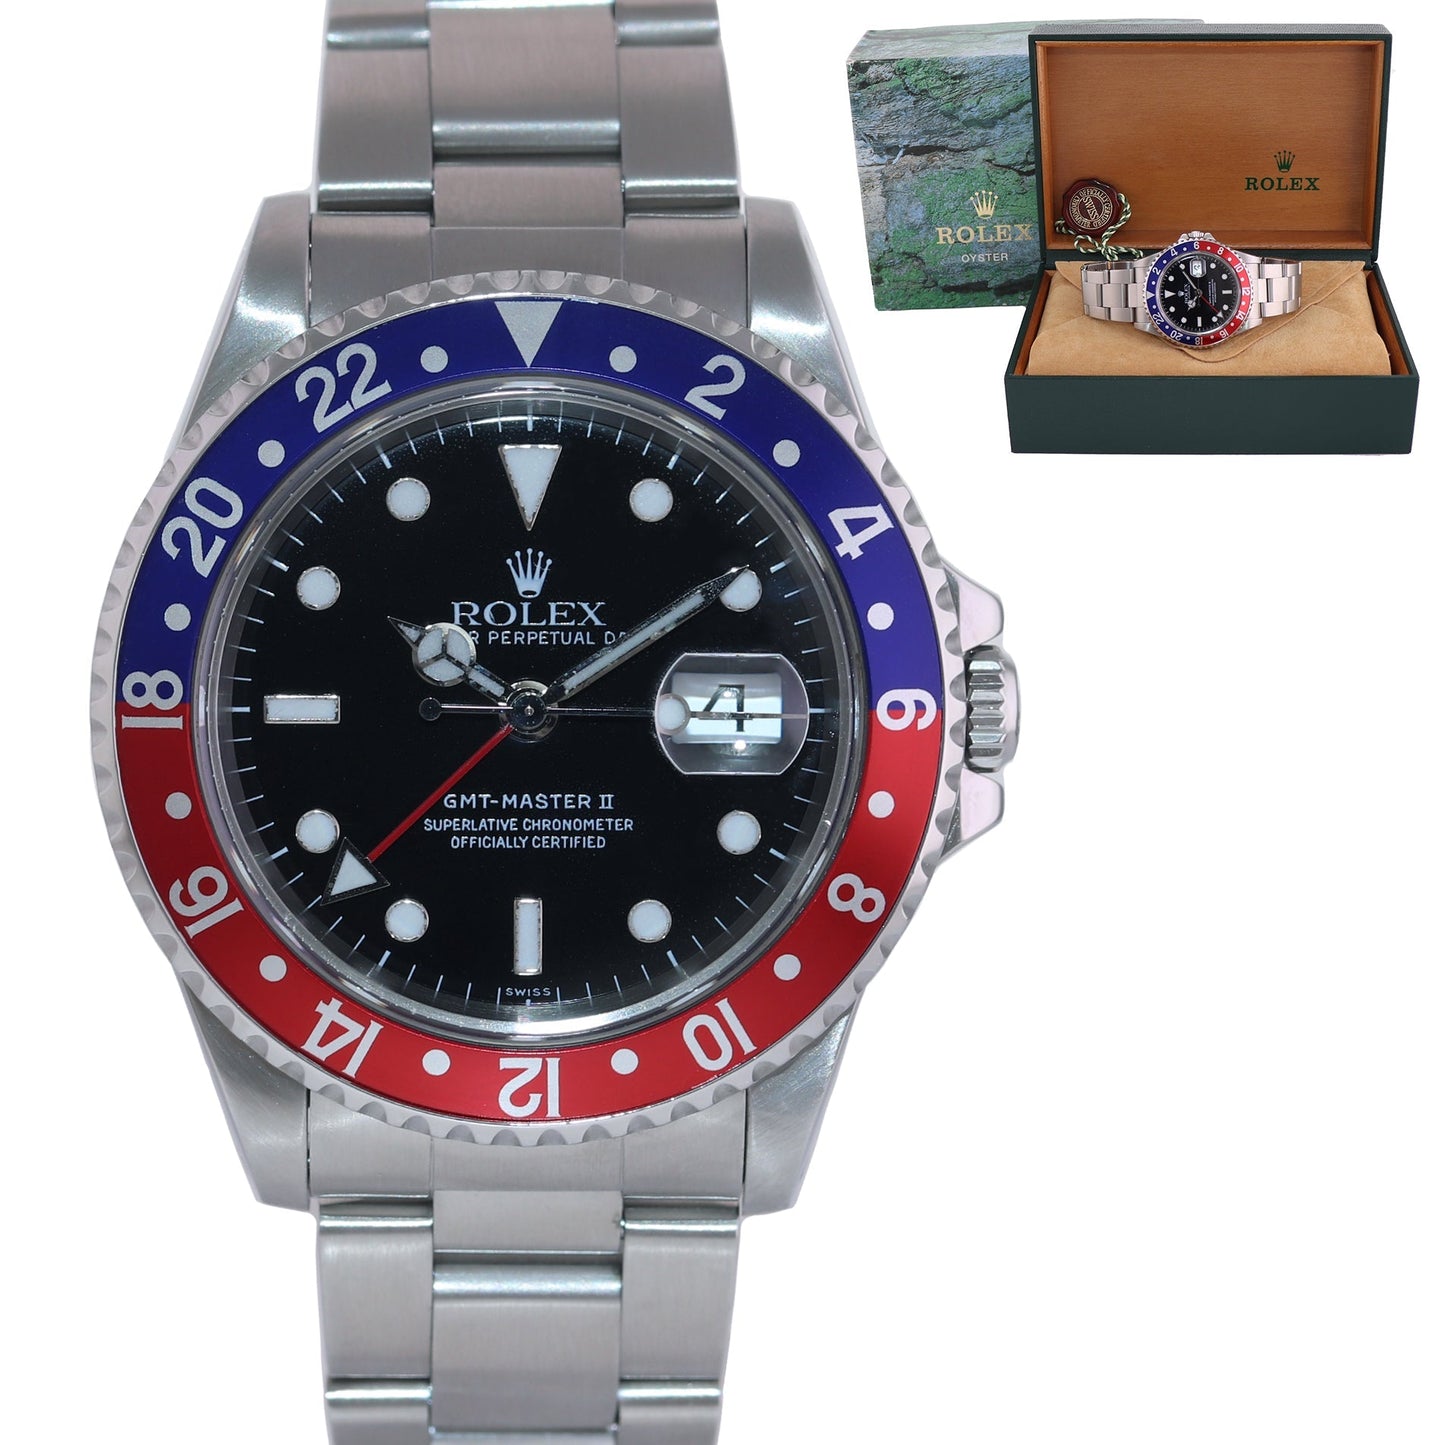 SWISS ONLY 1999 Rolex GMT-Master II Pepsi Blue Red Steel 16710 40mm Watch Box